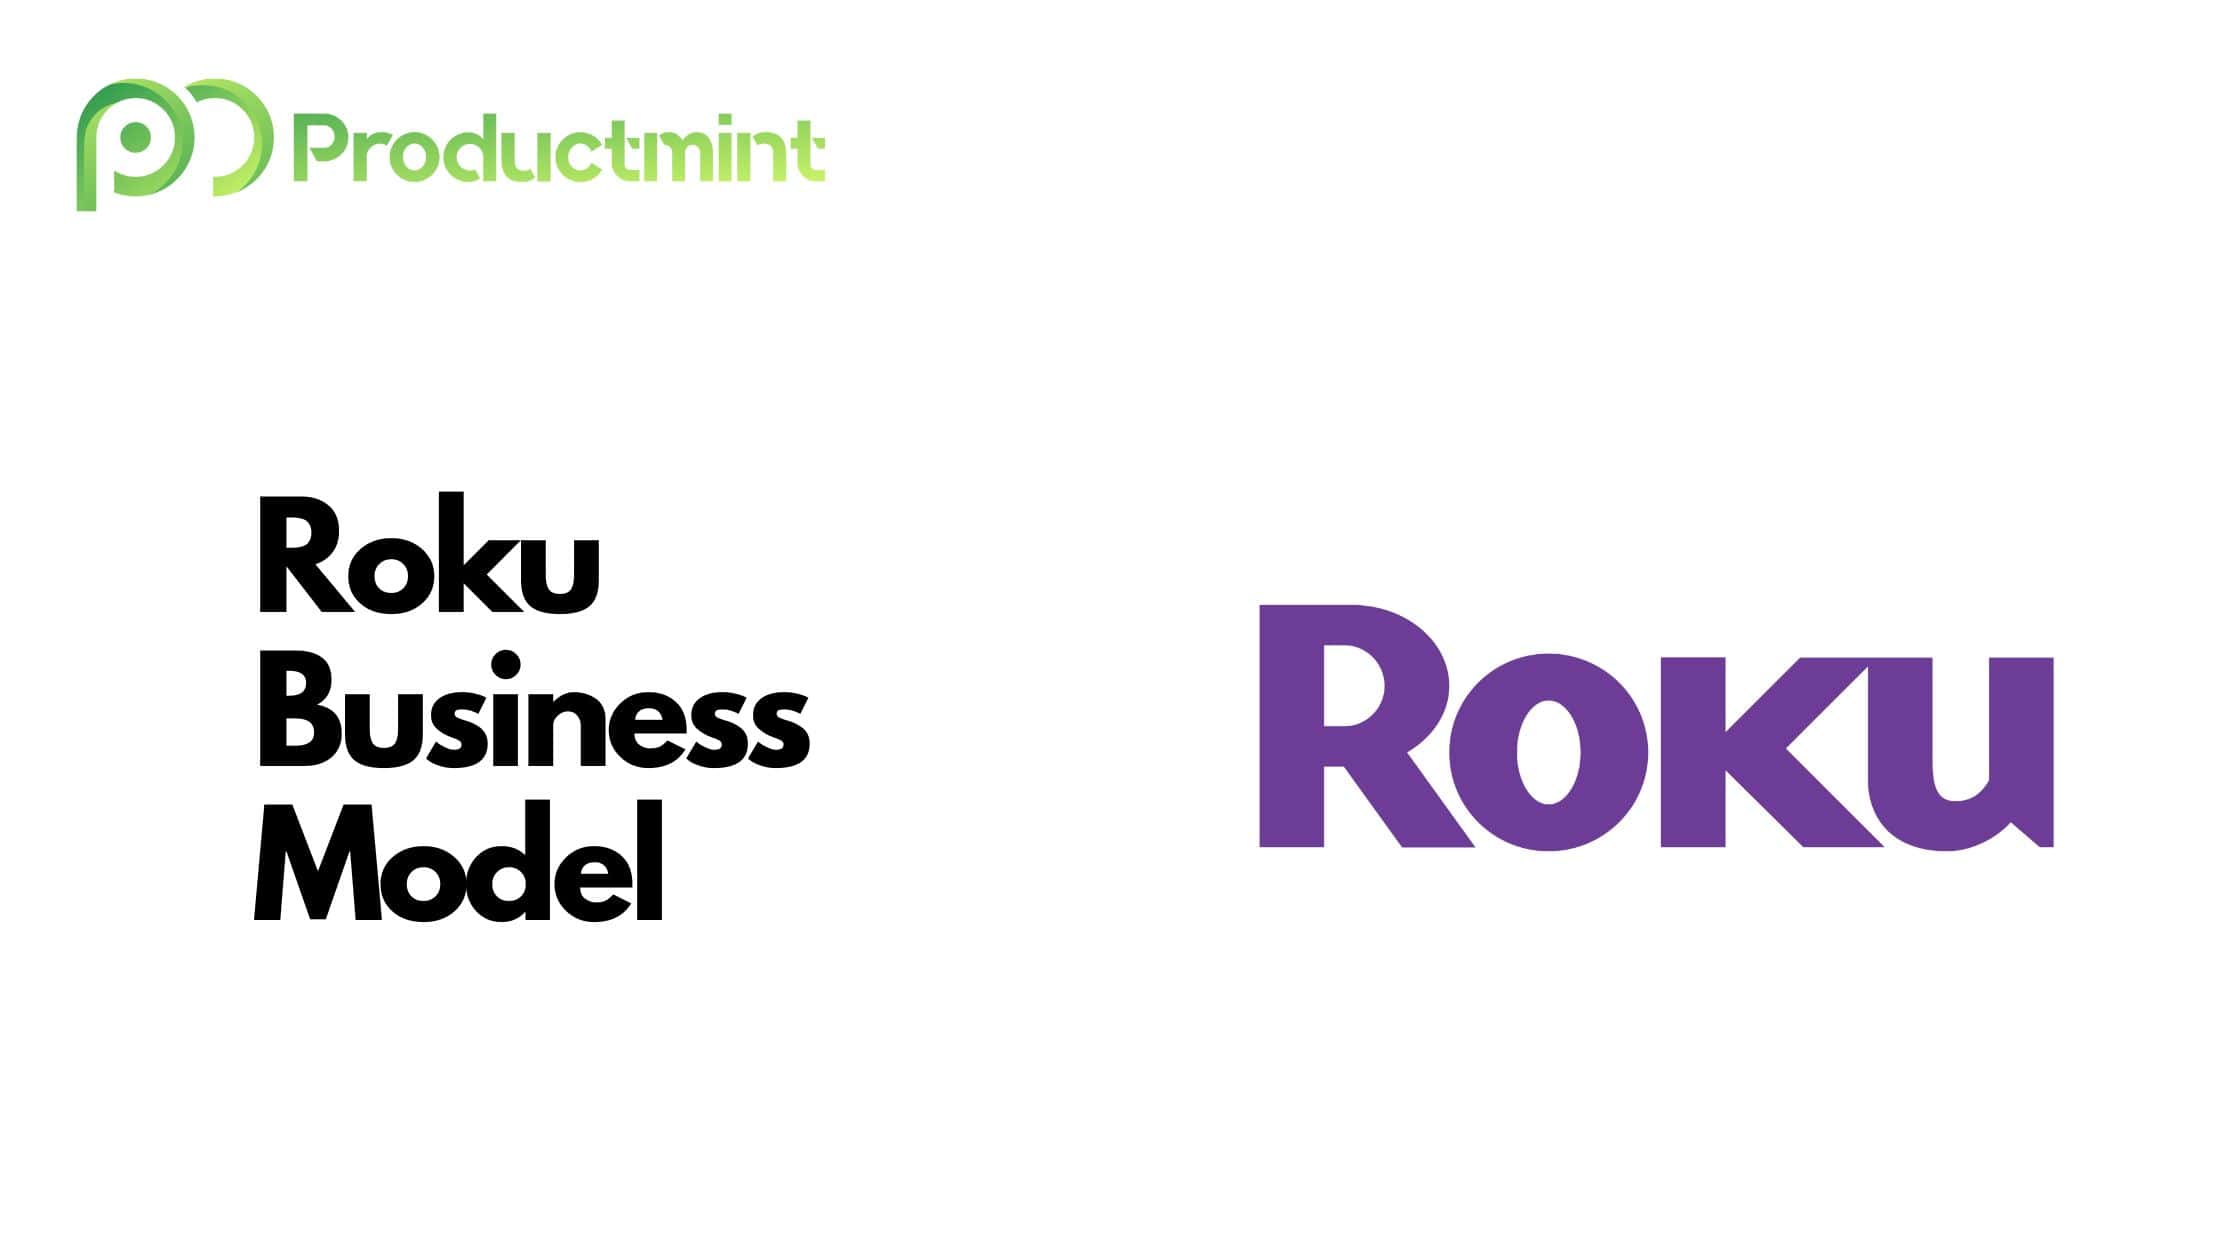 Roku Business Model